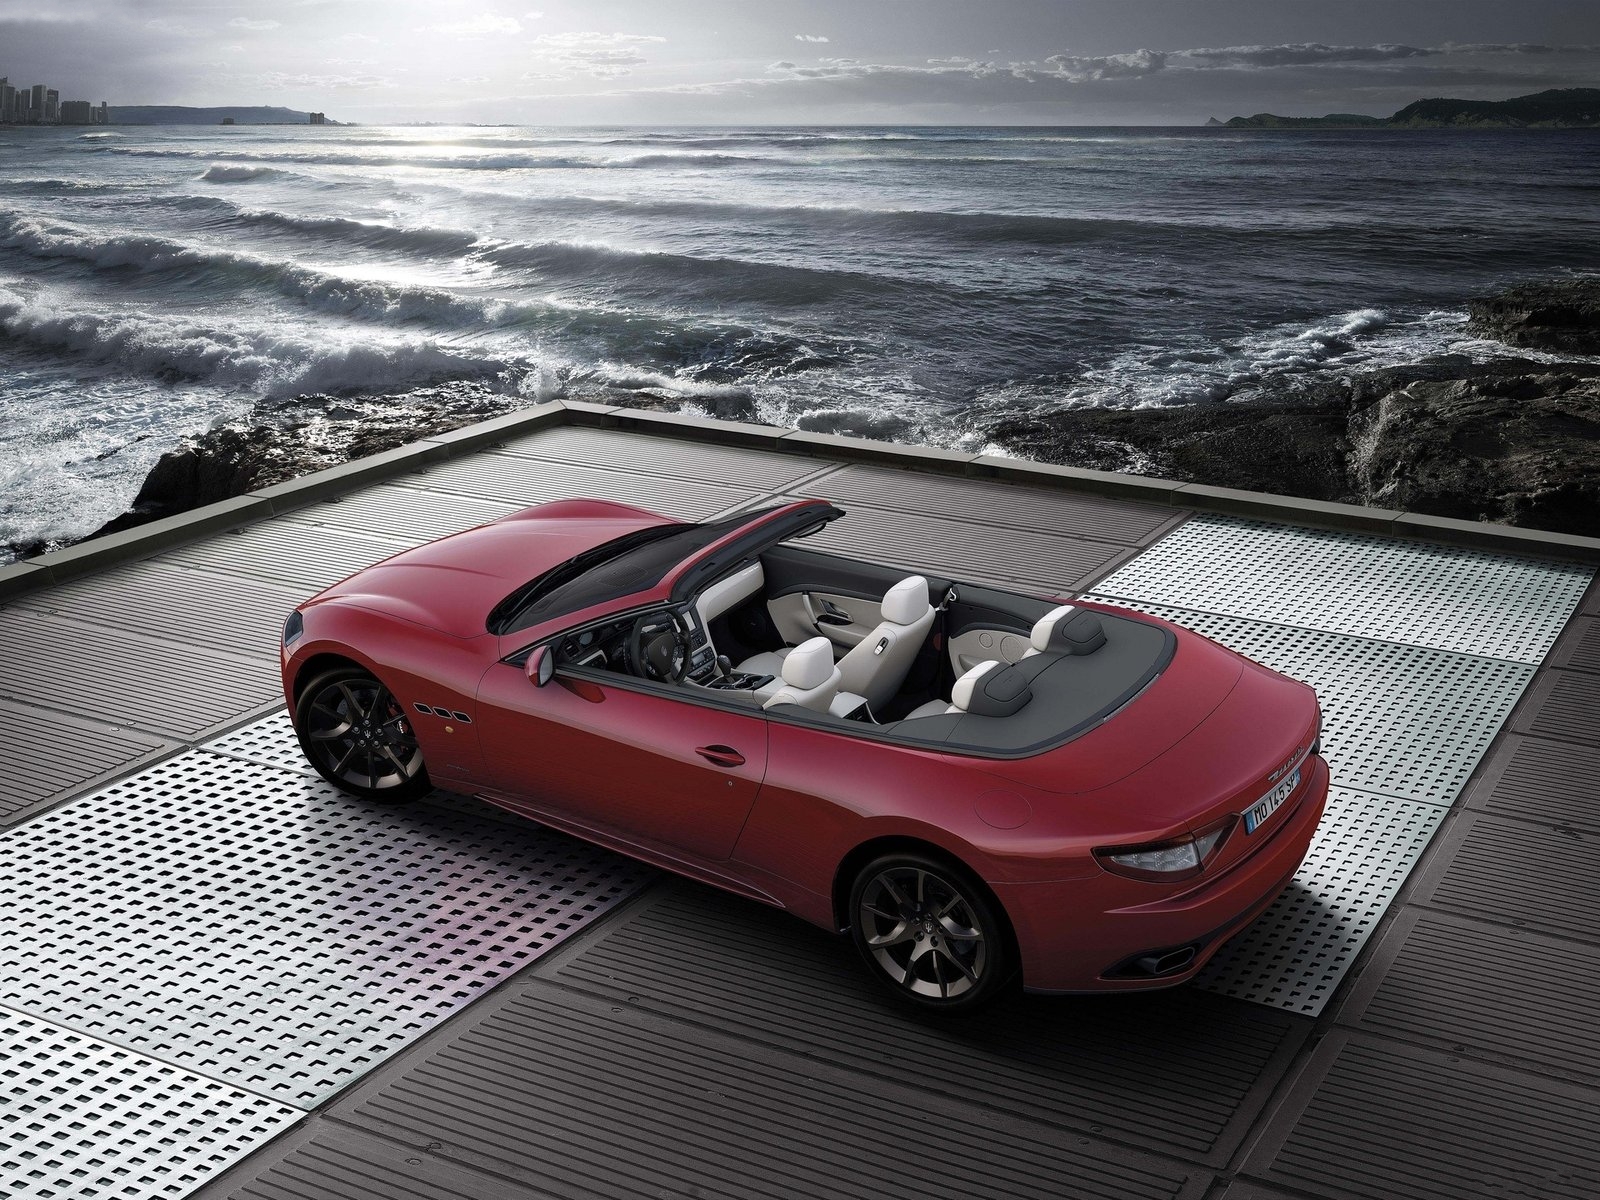 Descarga gratuita de fondo de pantalla para móvil de Maserati, Coche, Vehículos.